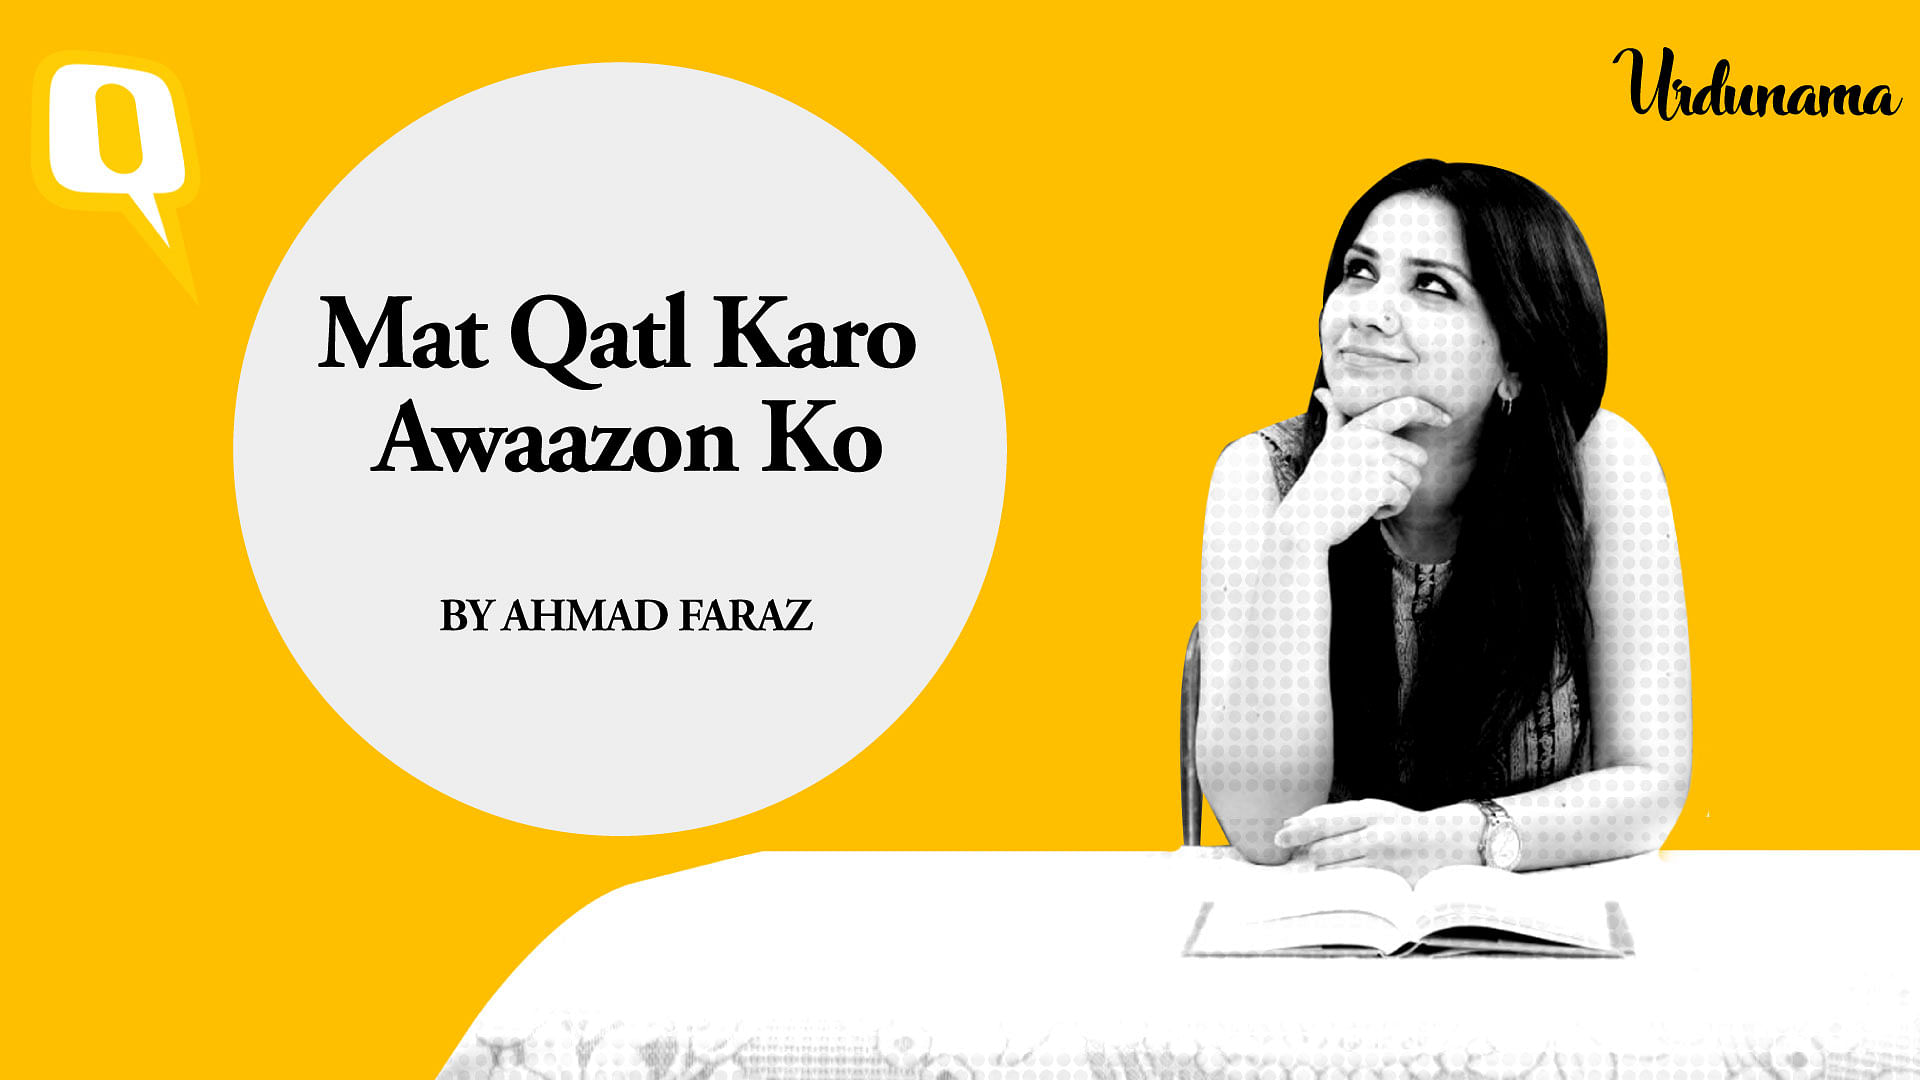 This week, watch <b>The Quint</b>’s Fabeha Syed recite Ahmad Faraz’s ‘Mat Qatl Karo Awaazon Ko’.